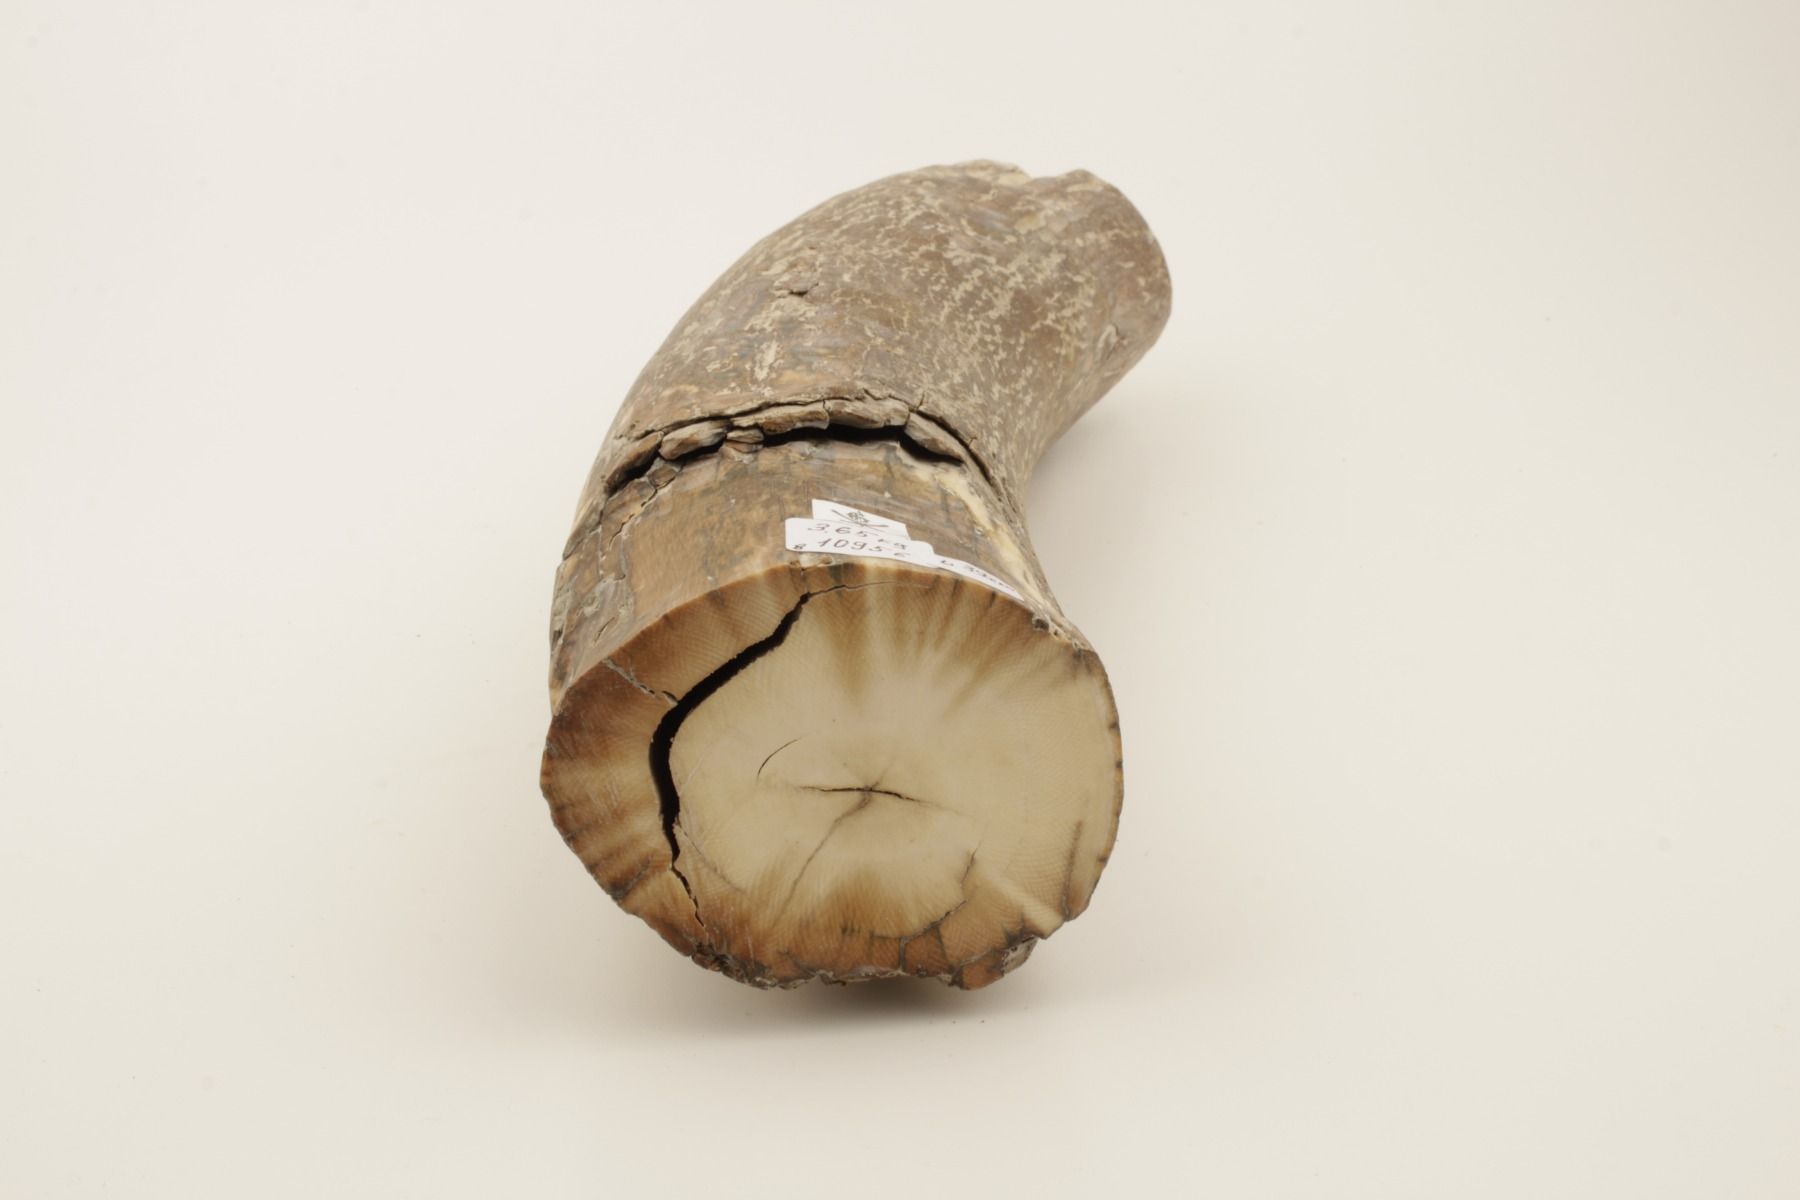 Brown mammoth tusk piece